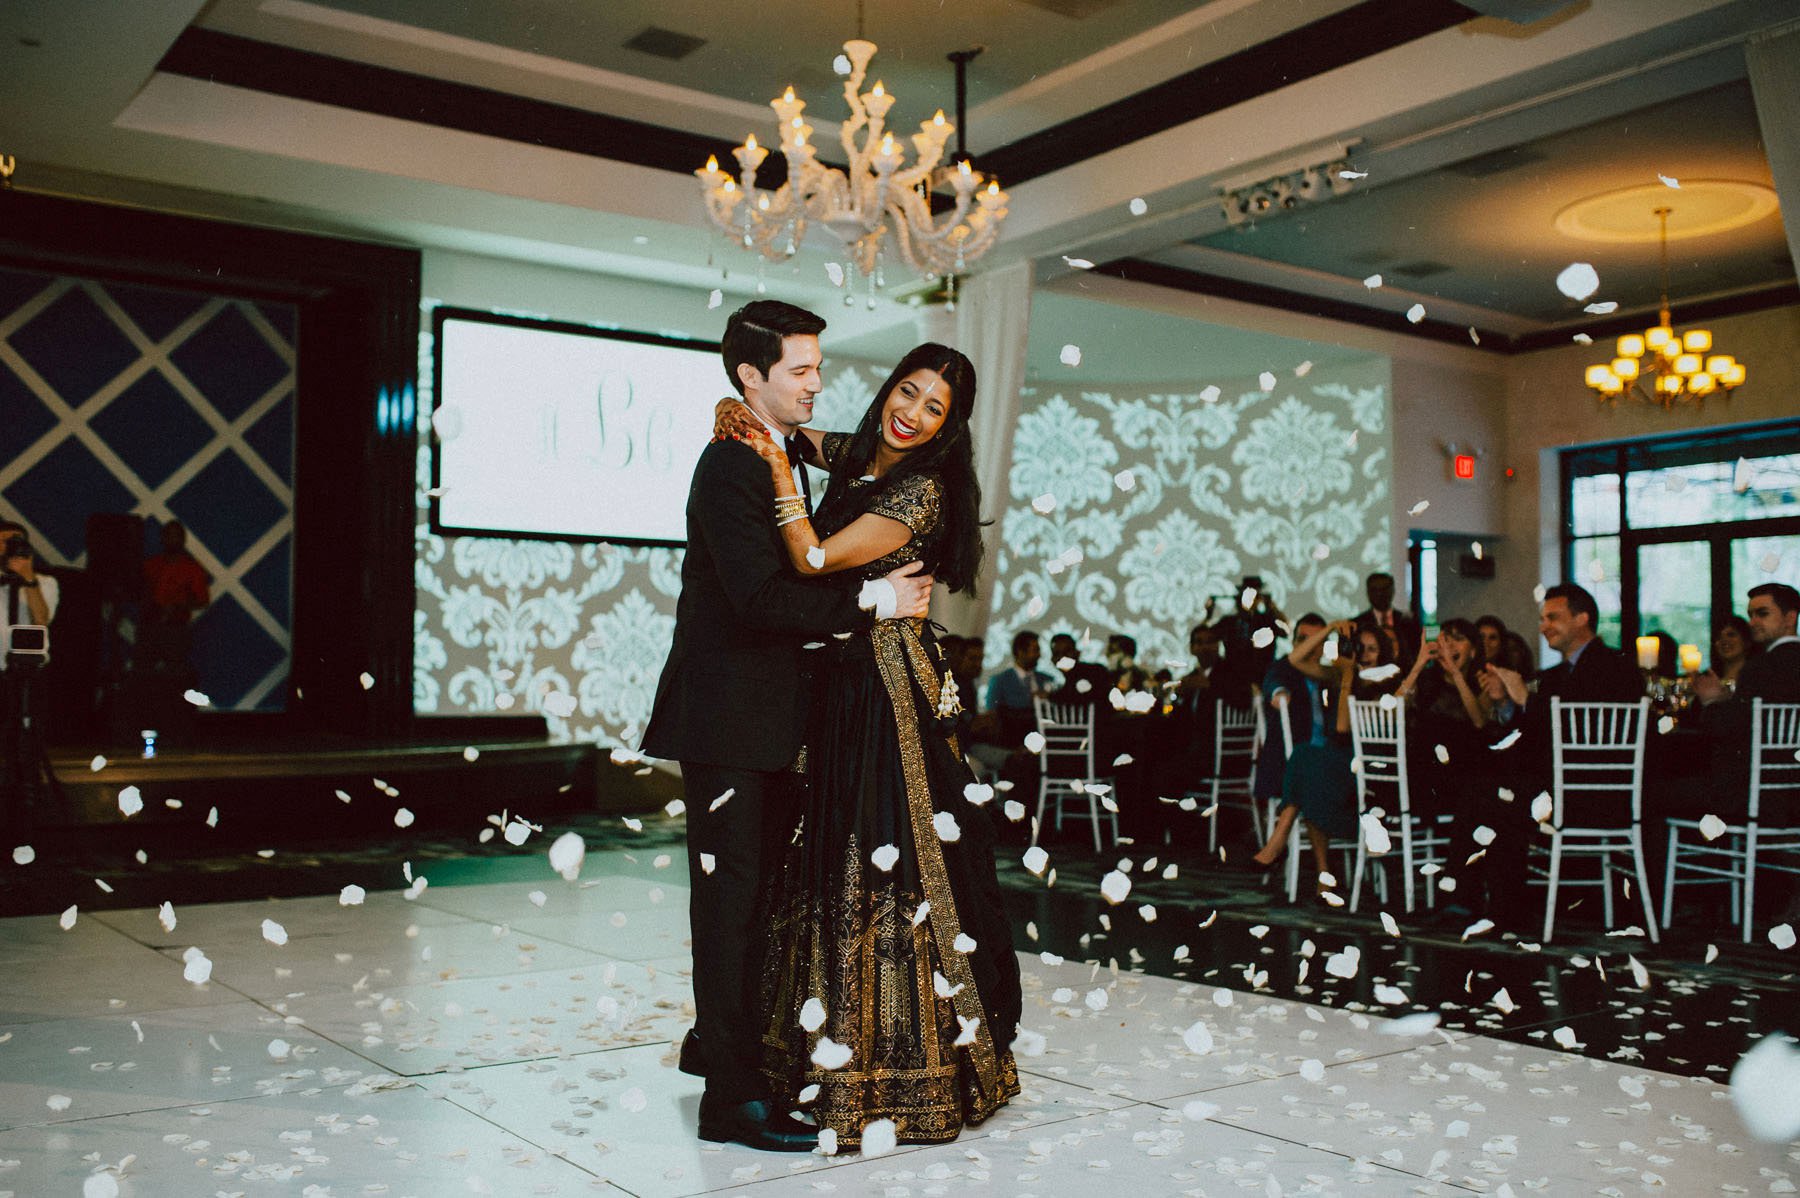 vie-philadelphia-indian-wedding-105.jpg